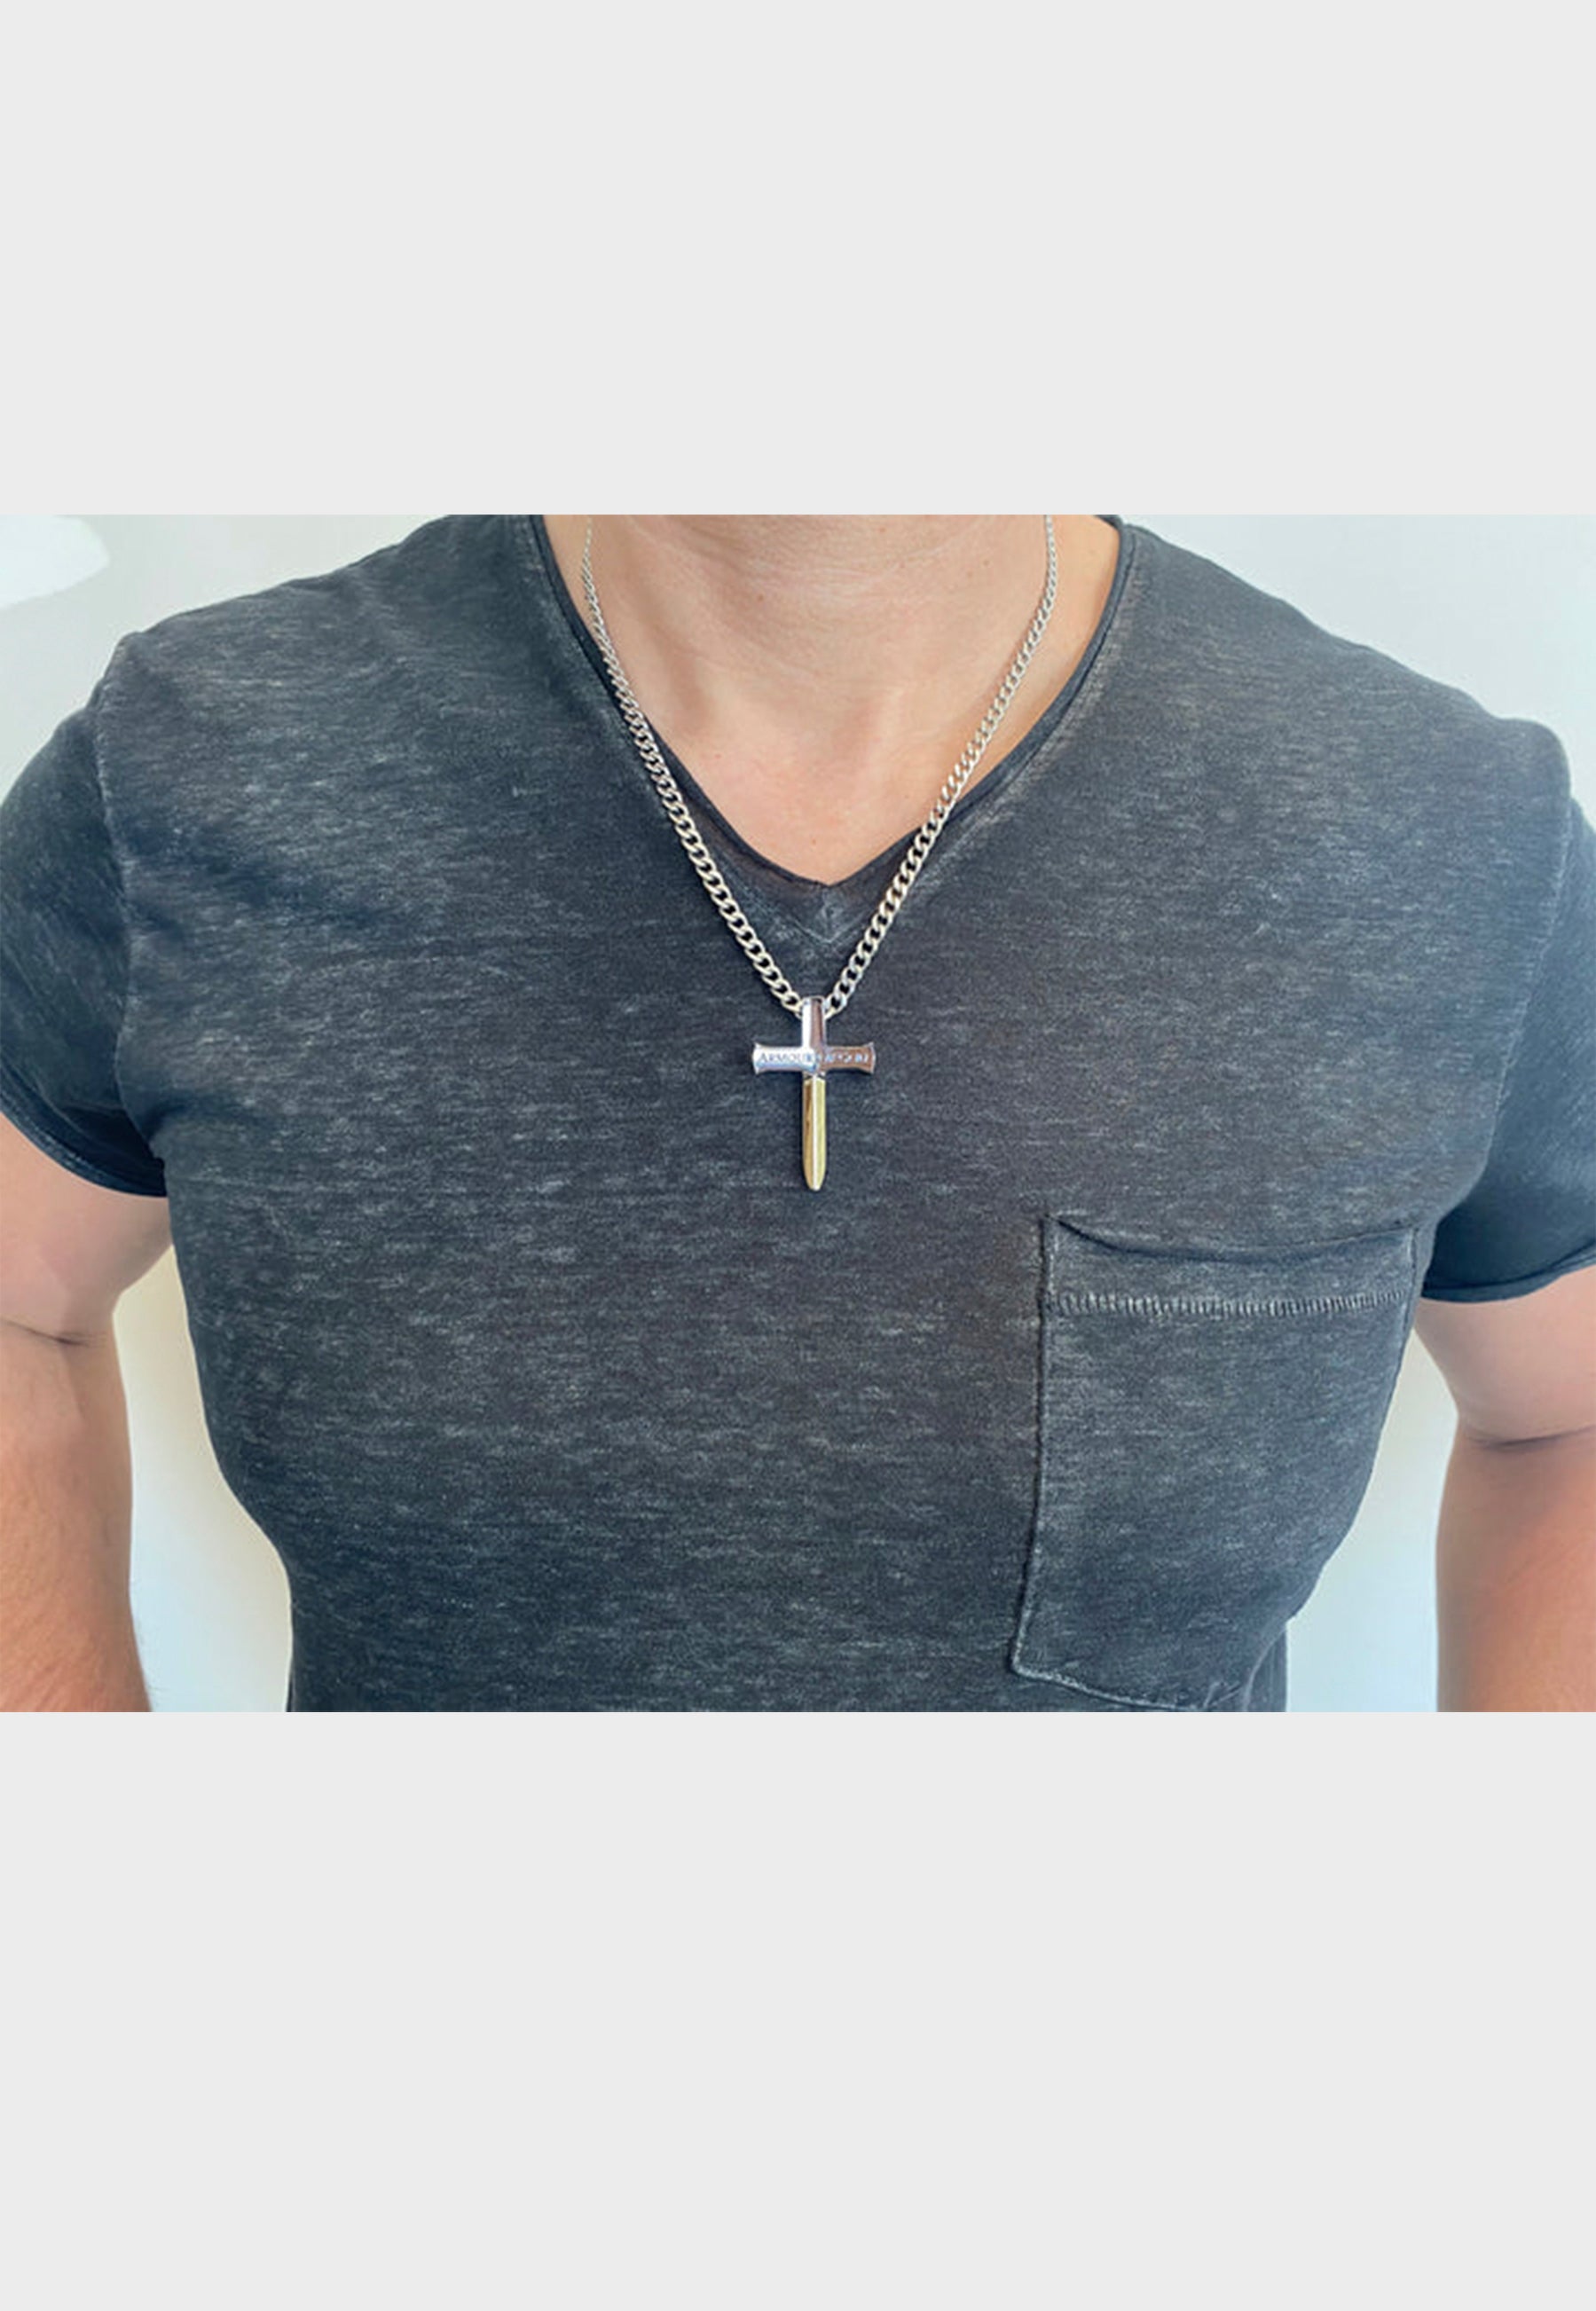 Model wearing Christian cross necklace